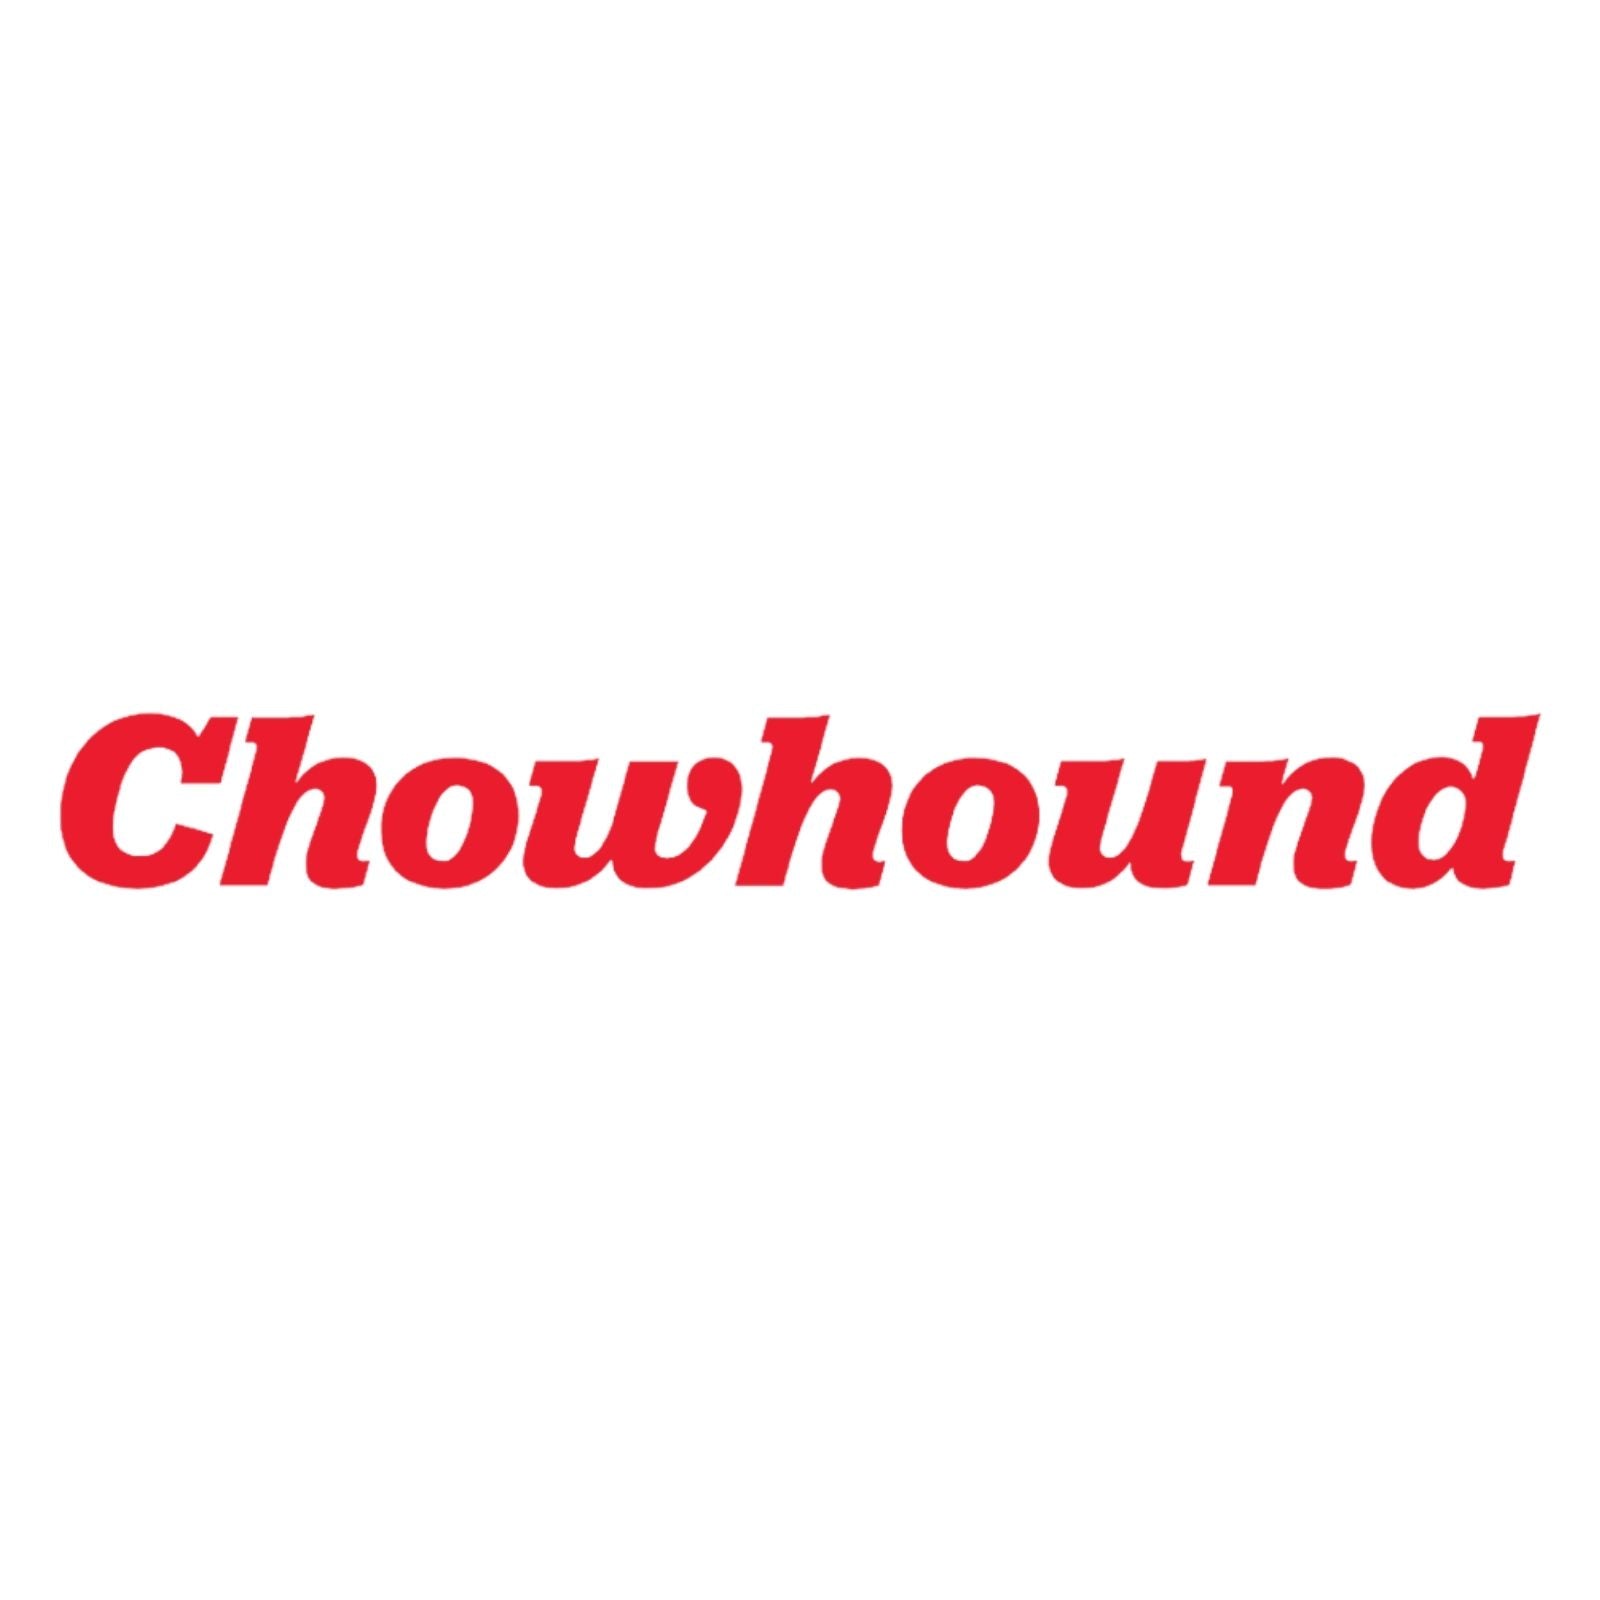 logo of chowhound website